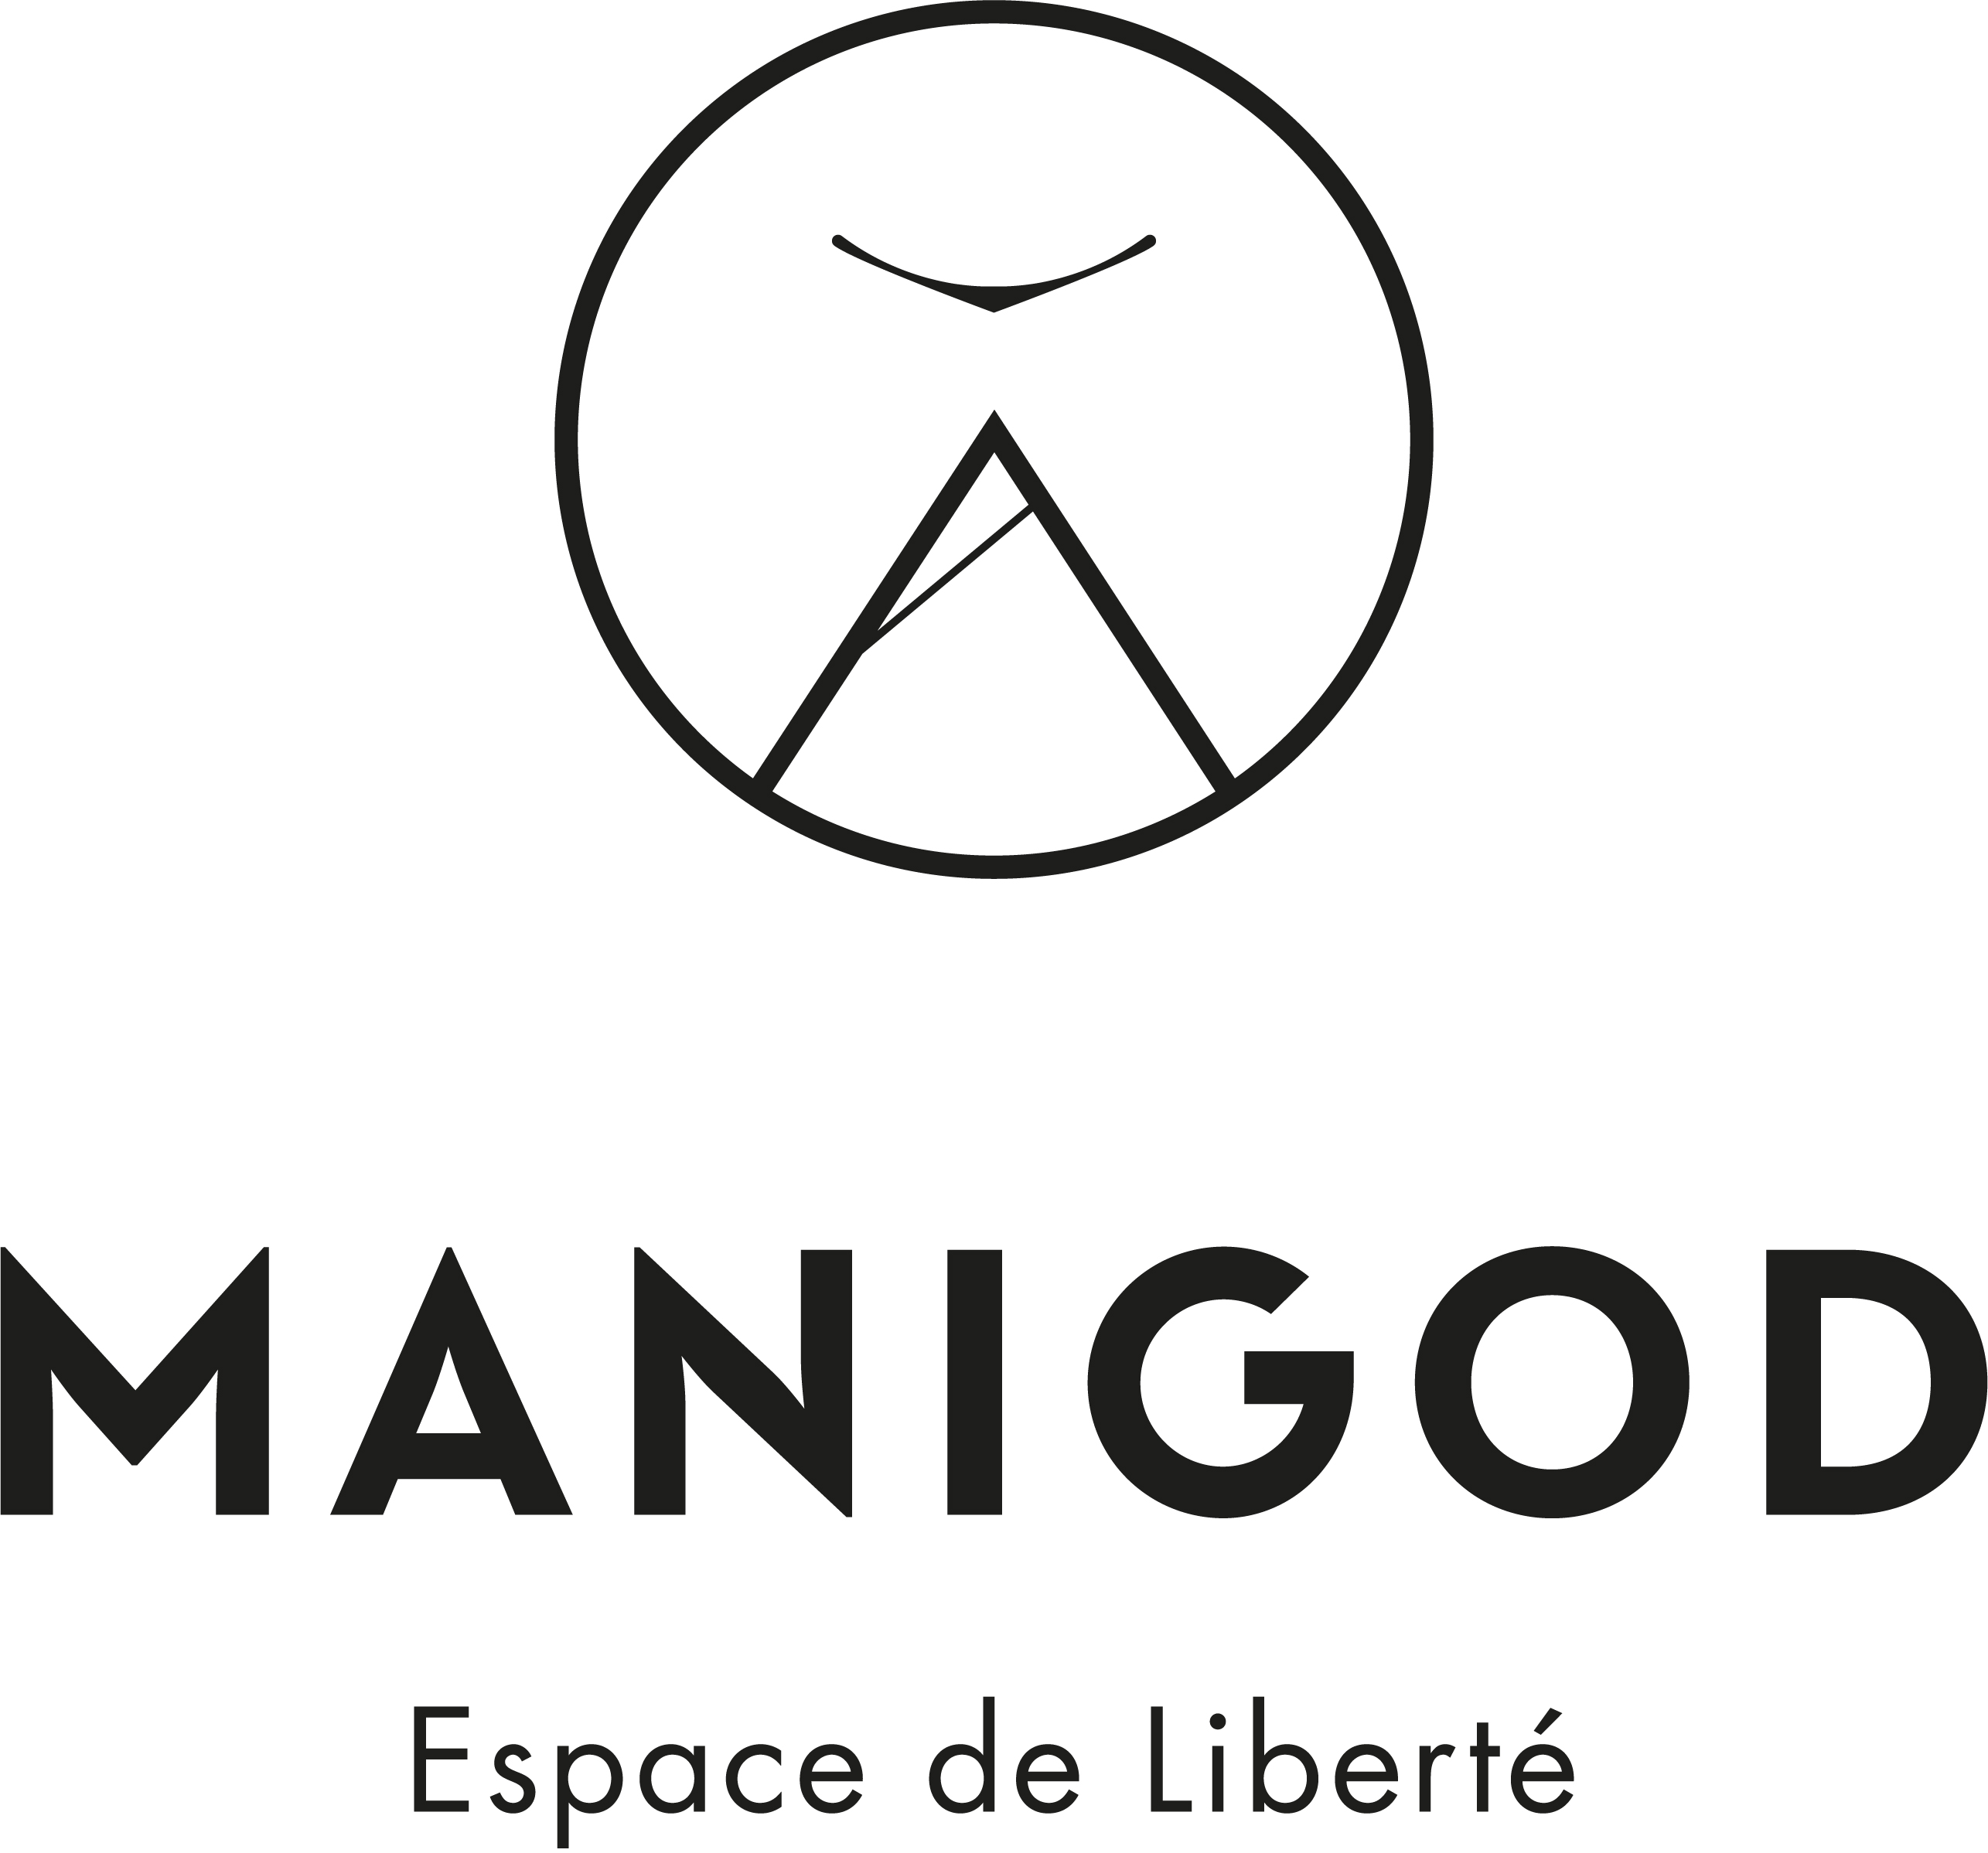 Manigod